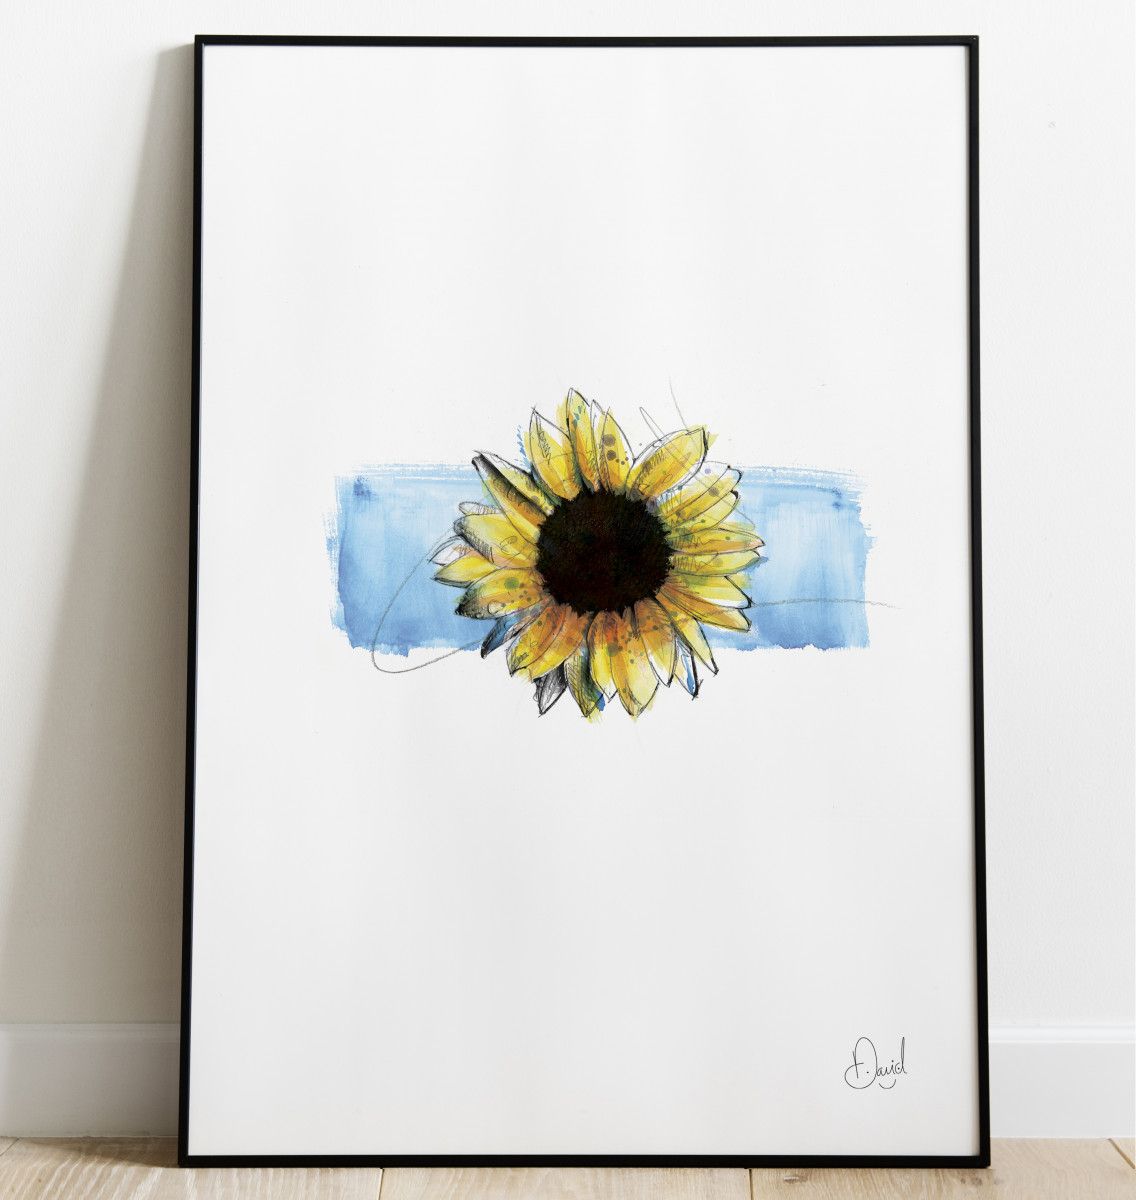 Just another Sunflower art print